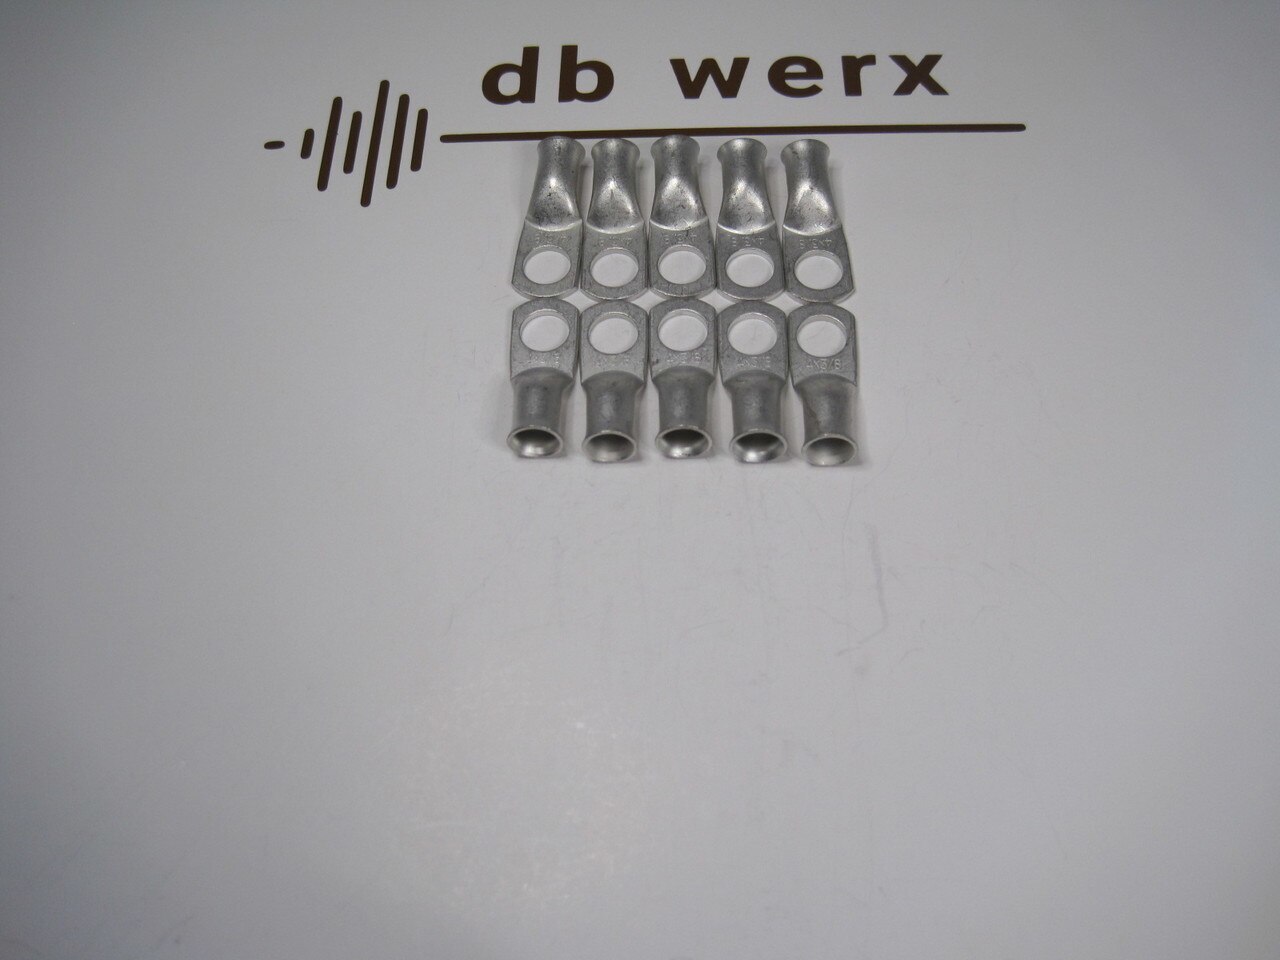 db werx 4 GA Tinned Copper Lugs (3/8" hole). PK/20